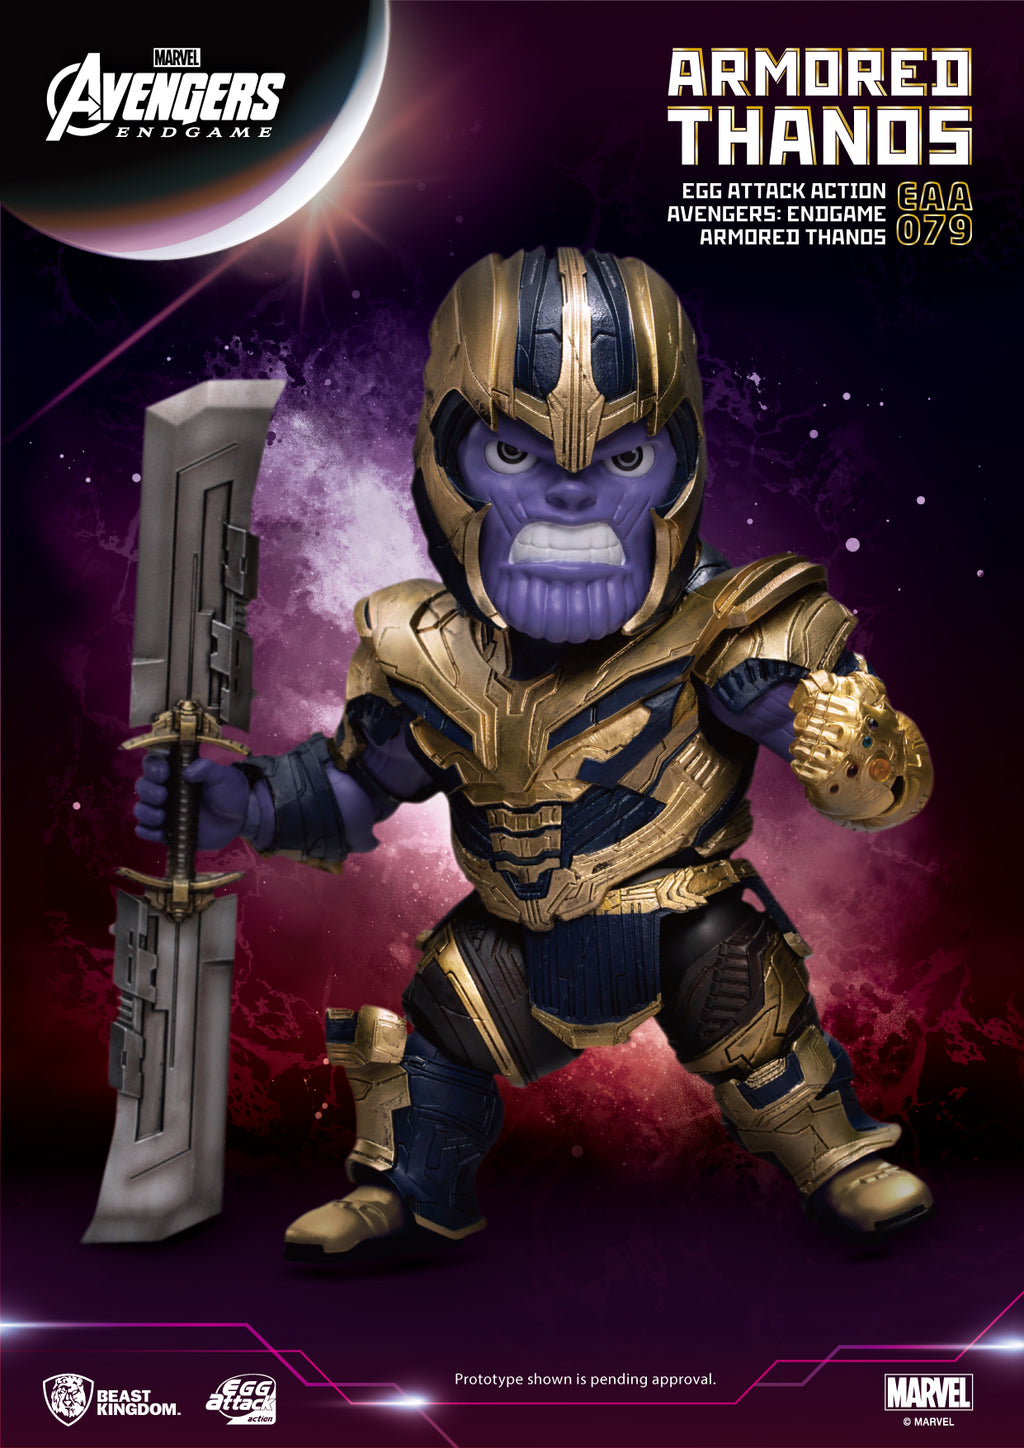 Beast Kingdom: EAA-079 Avengers: Endgame Armored Thanos